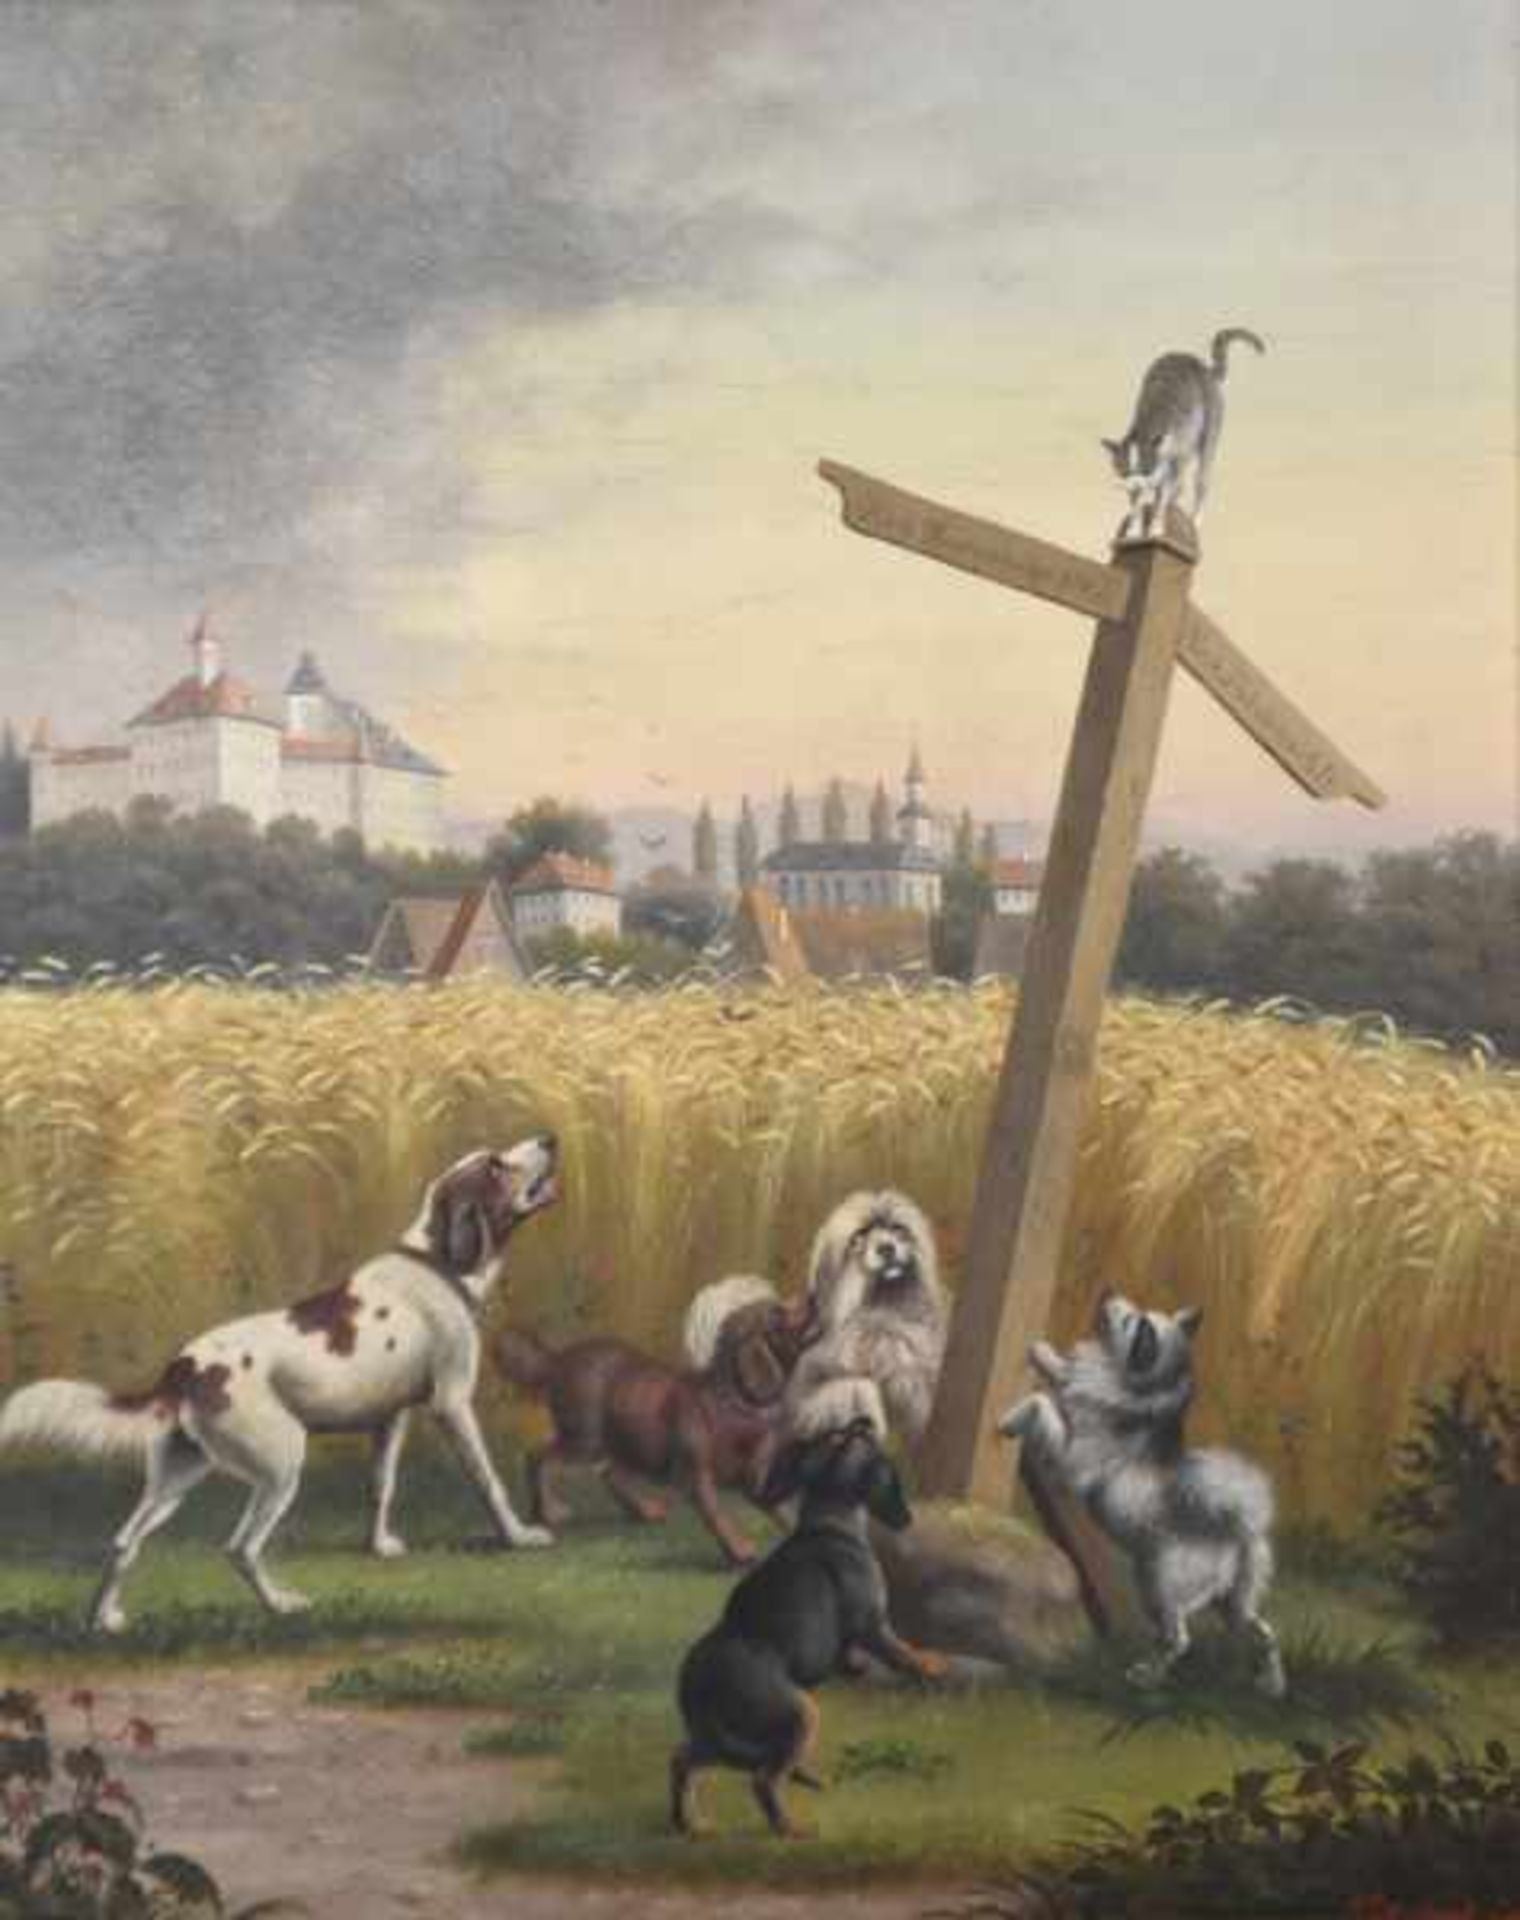 GEORGIUS Robert (1871 - 1942 Deutschland) "Hunde am Wegkreuz", 5 Hunde bellend vor einem Wegkreuz